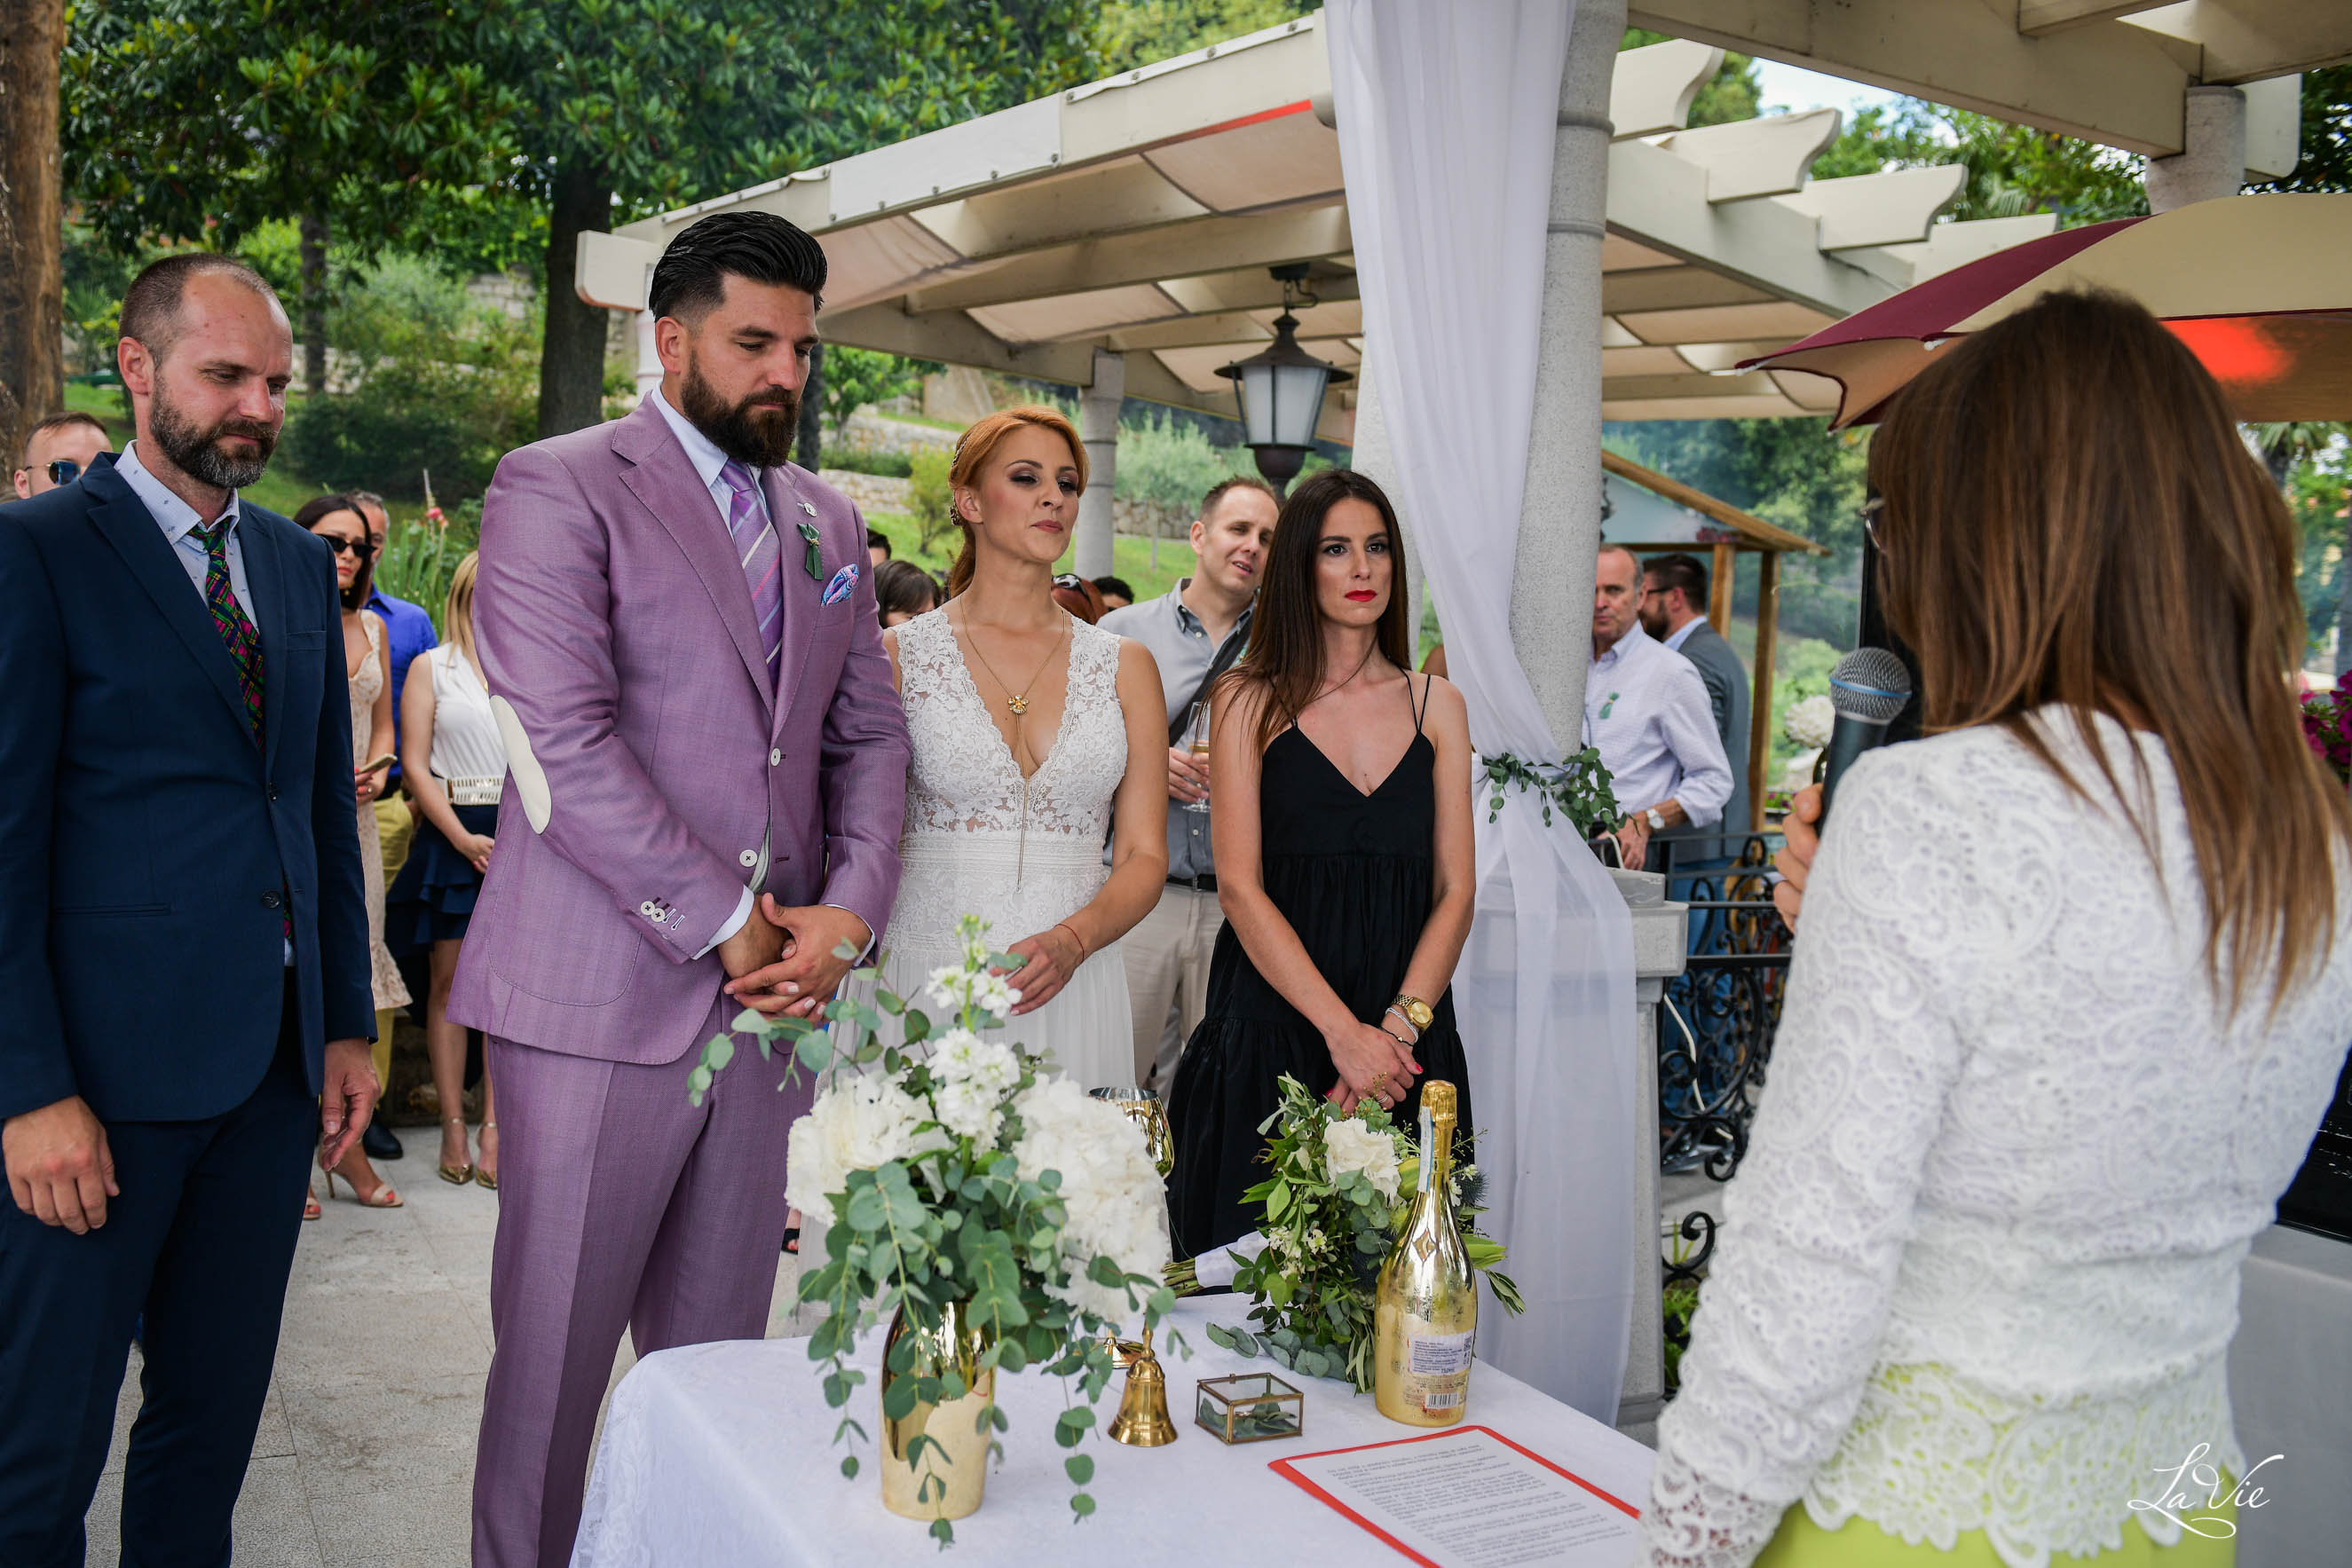 Eudaimonia wedding party uz projekt "Vinum amoris"